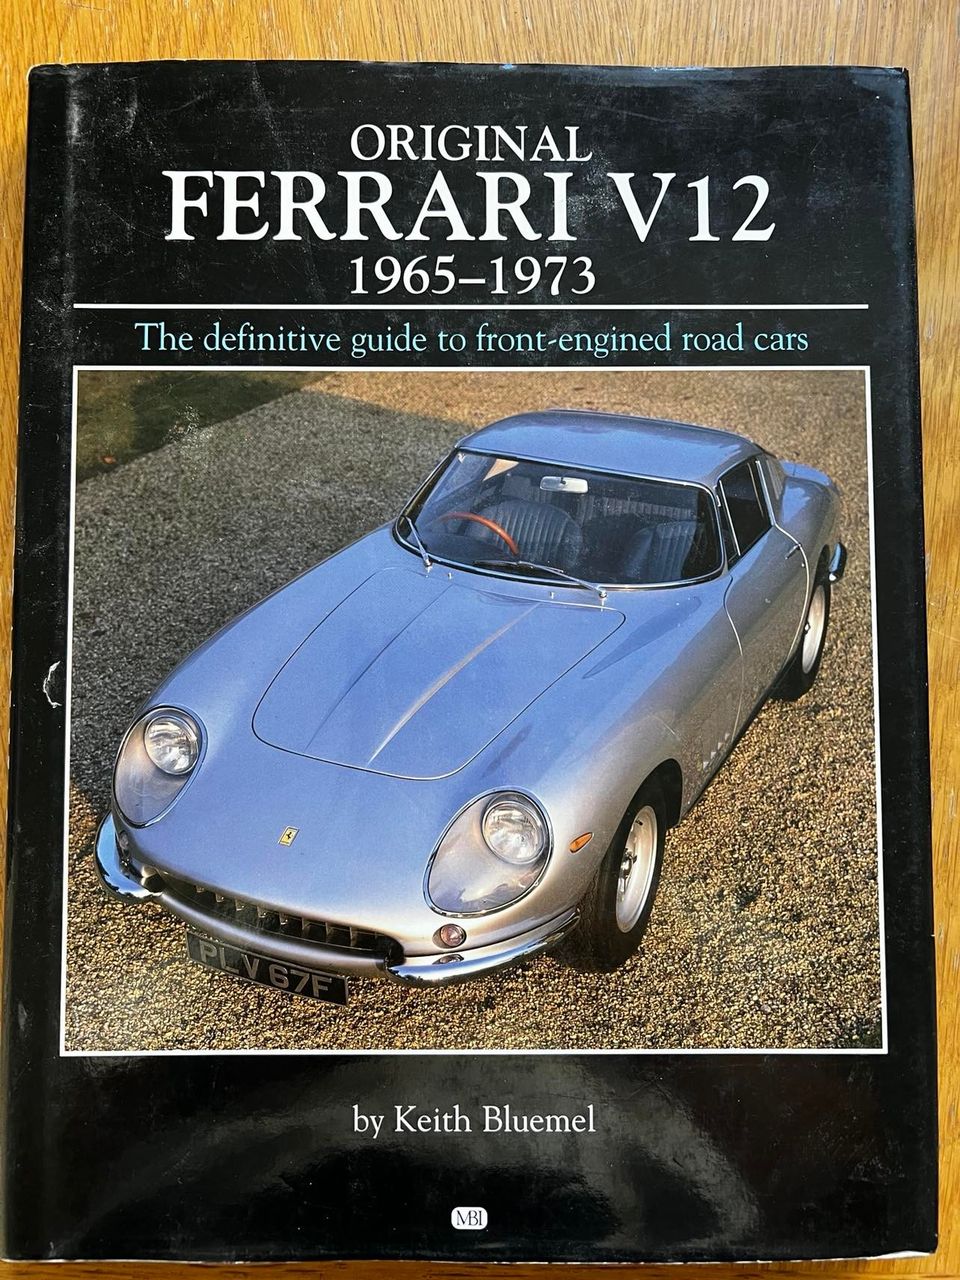 Original Ferrari V12 1965-73 Guide to front engined road cars